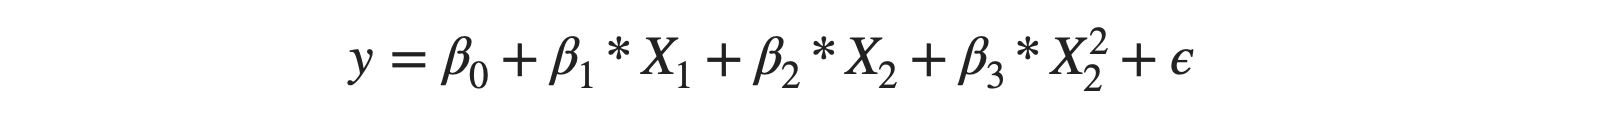 Polynomial regression example